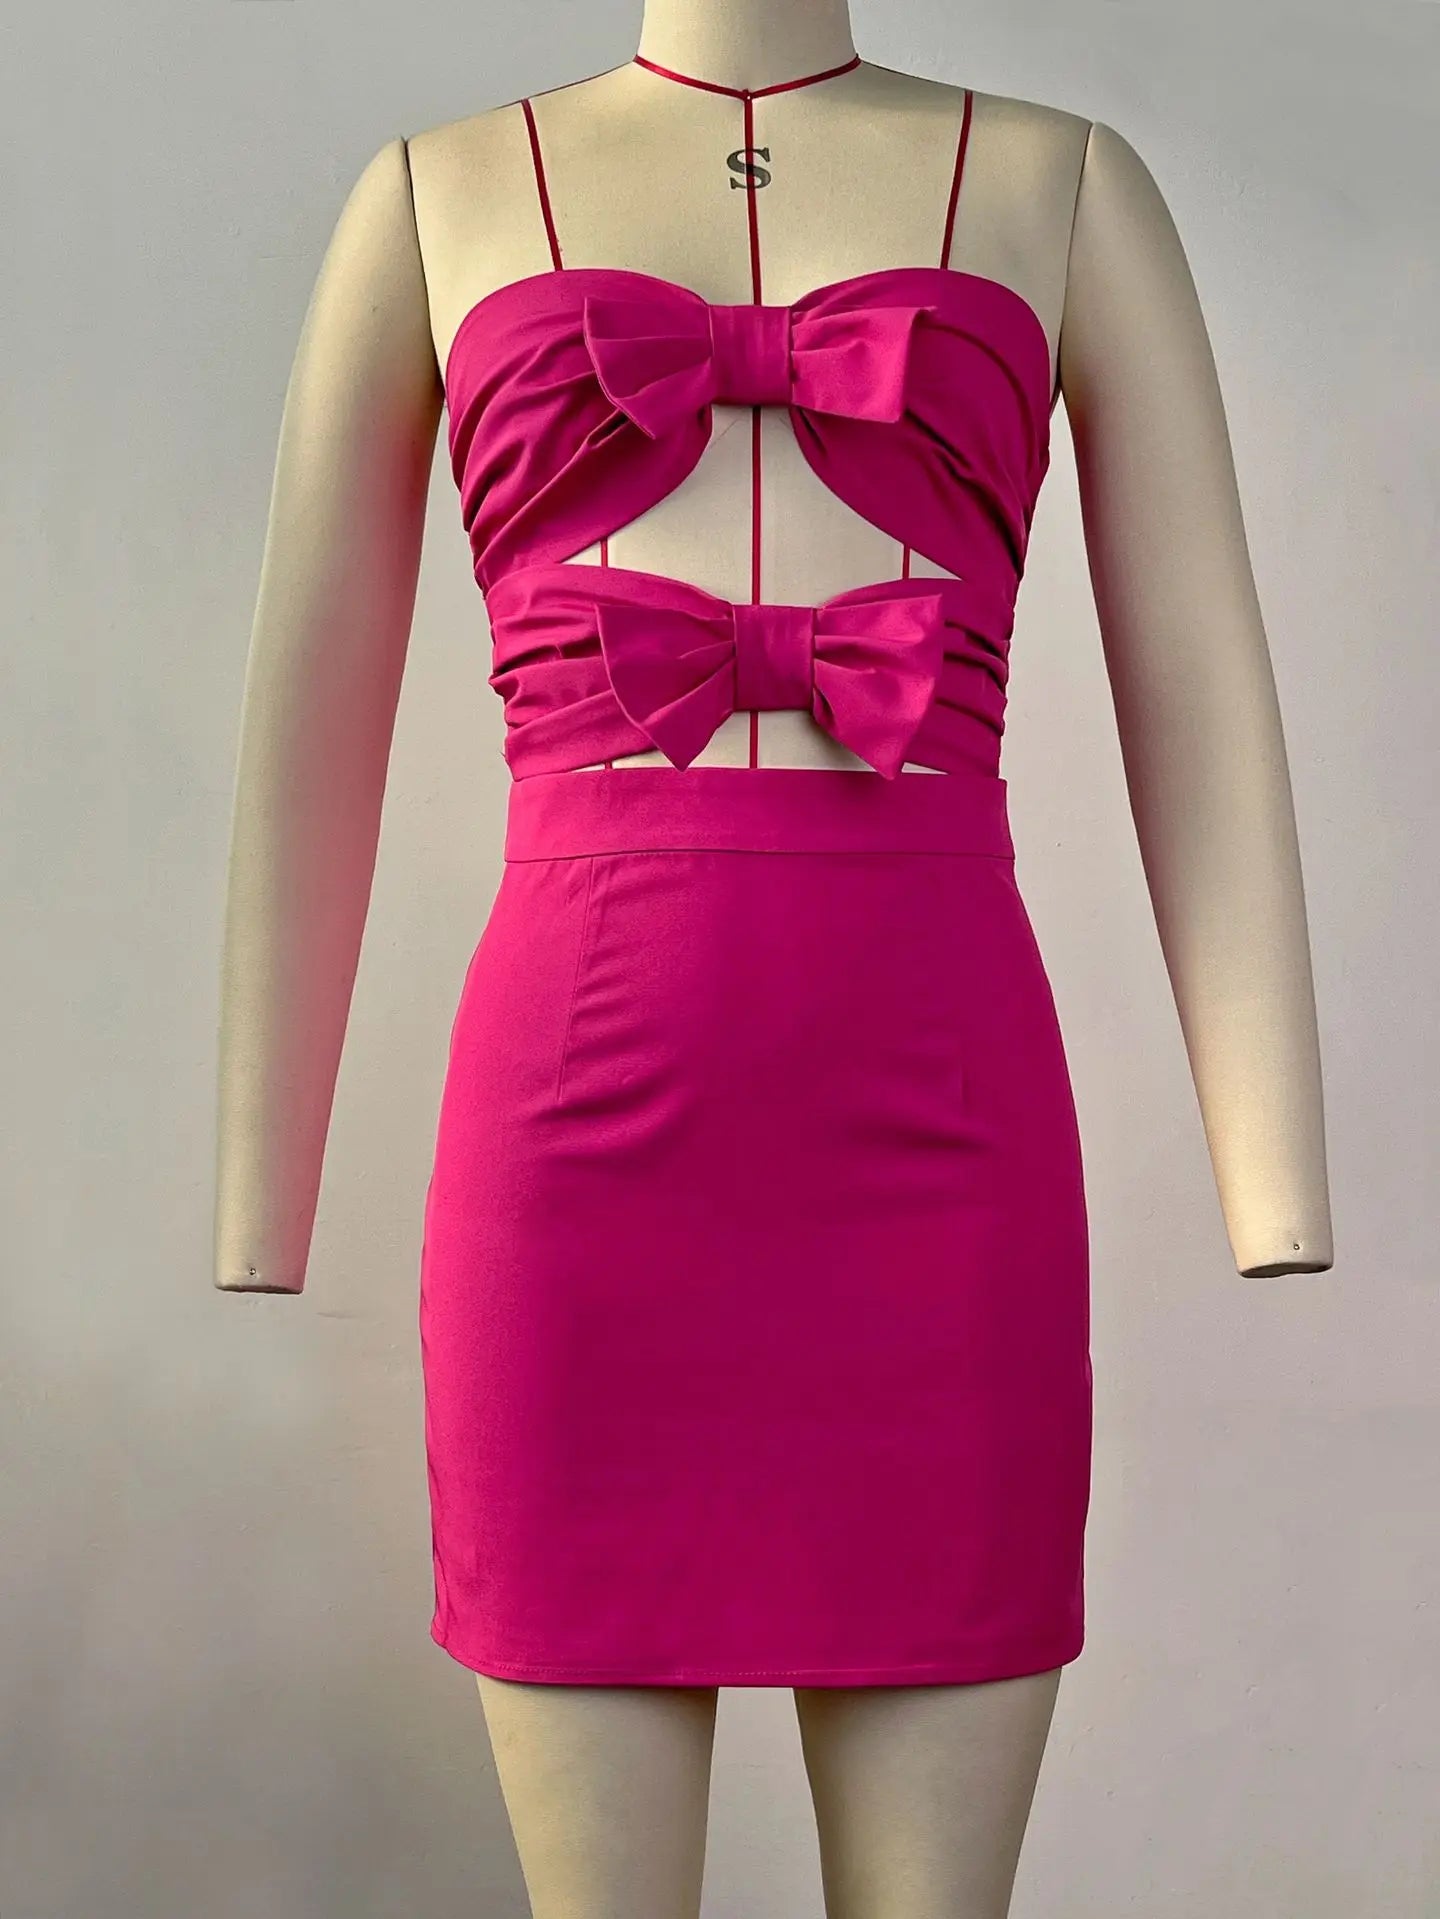 Julia Fashion - Short Backless Straight Skirt Party Club Women's Bodycon Mini Dress